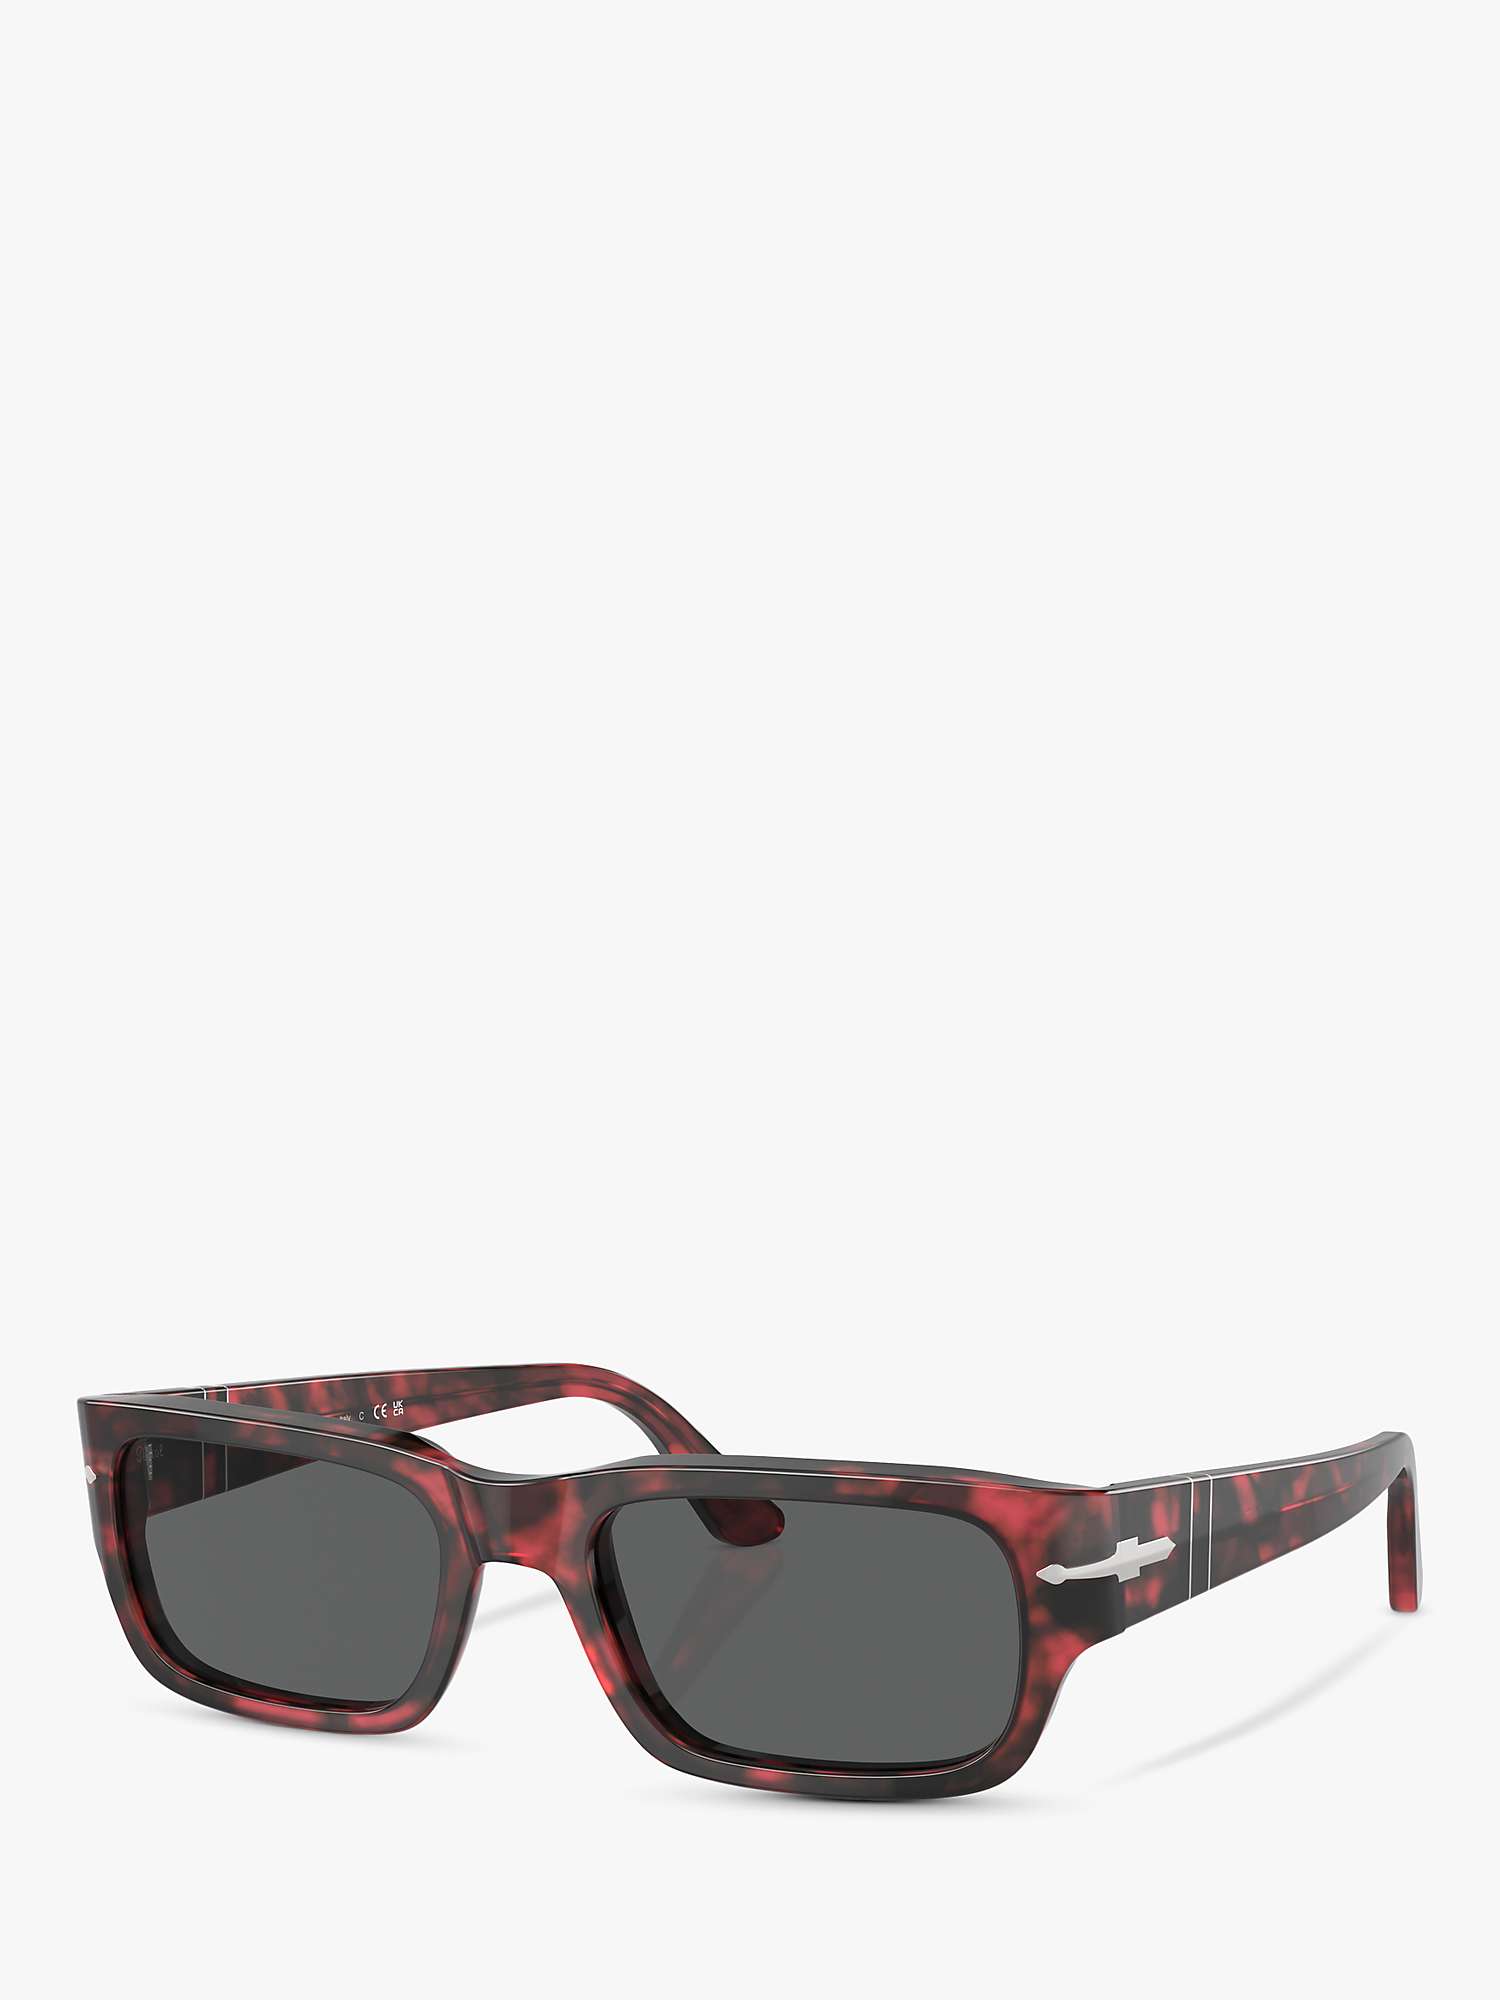 Buy Persol PO3347S Unisex Rectangular Sunglasses, Red Havana/Grey Online at johnlewis.com